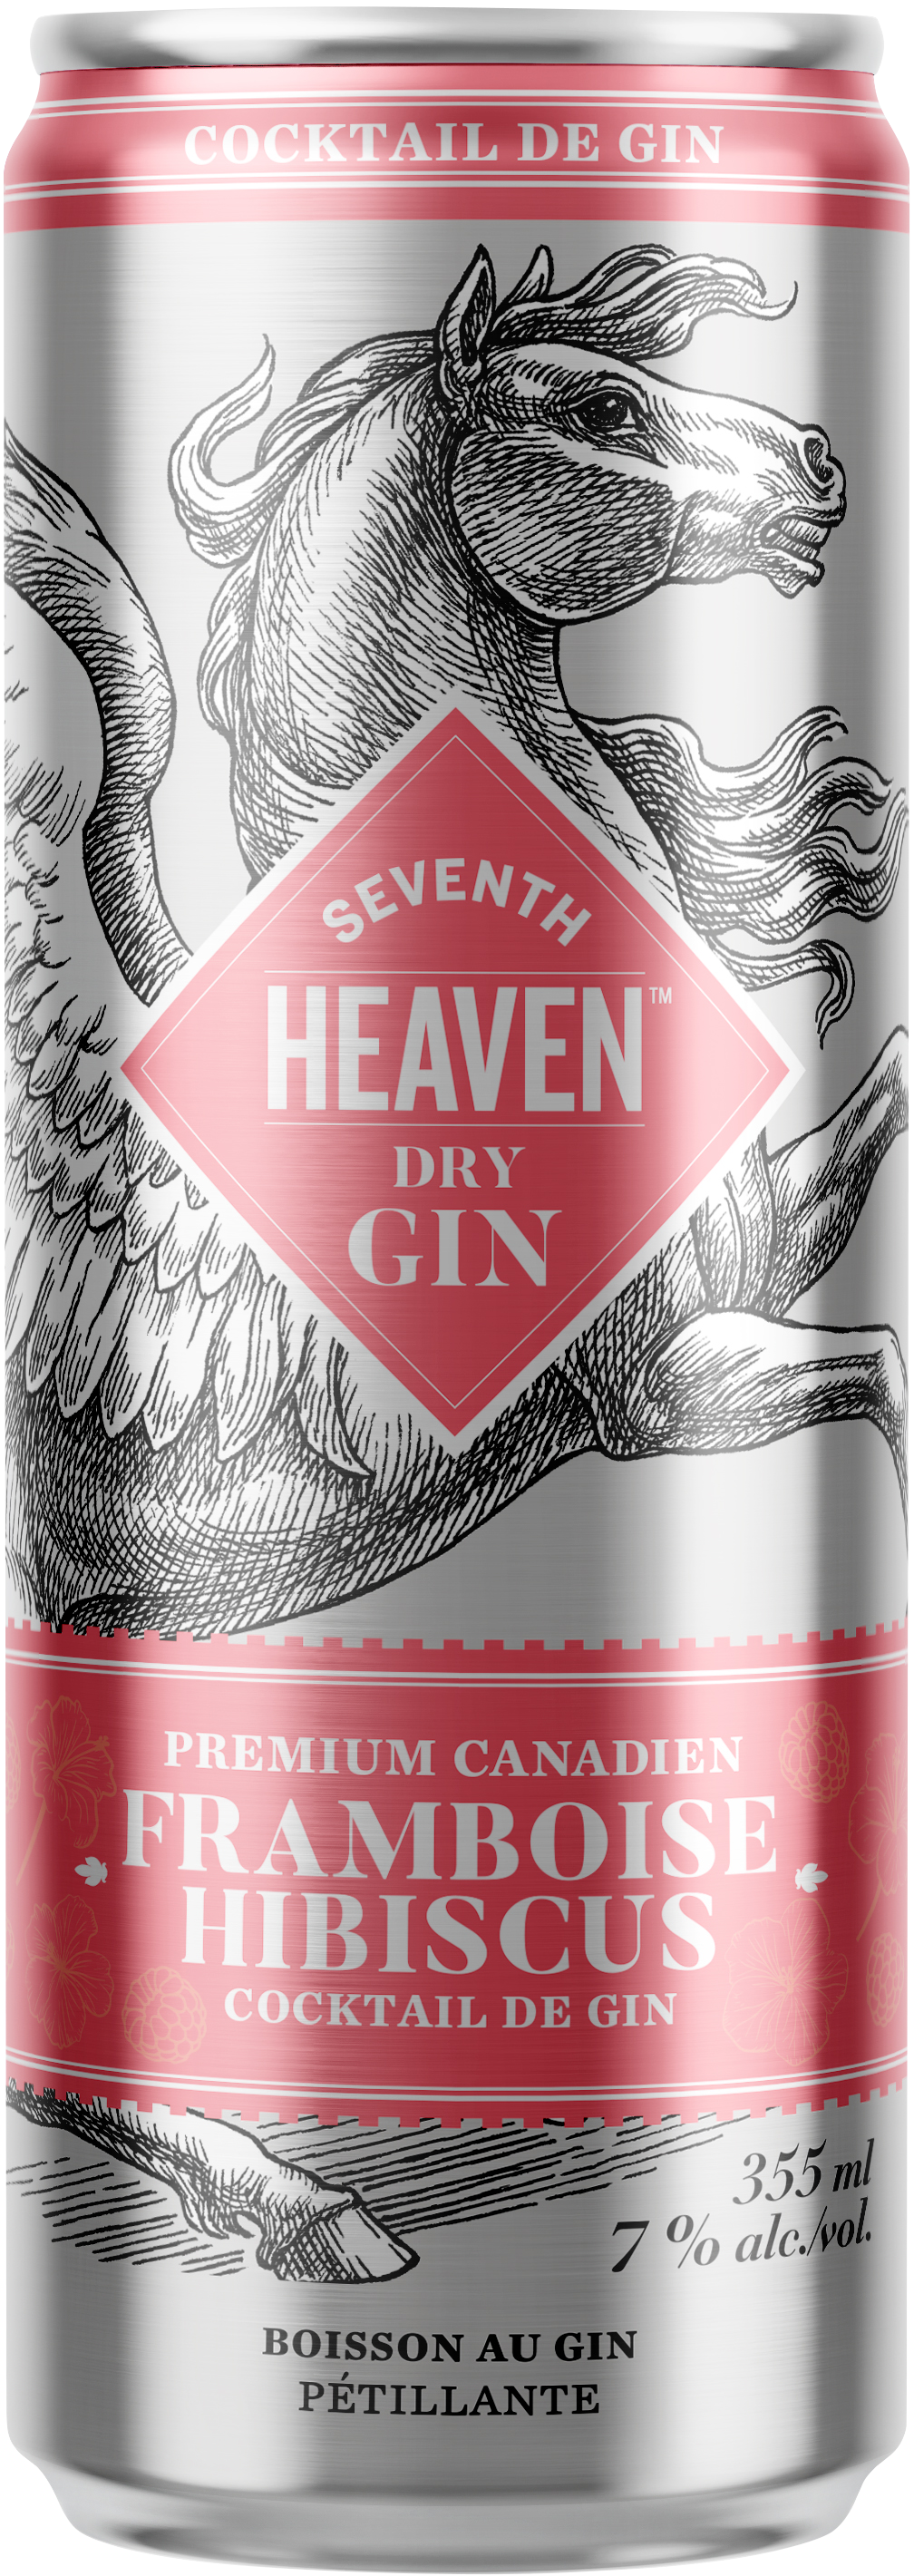 Seventh Heaven Cocktail de Gin Framboise Hibiscus